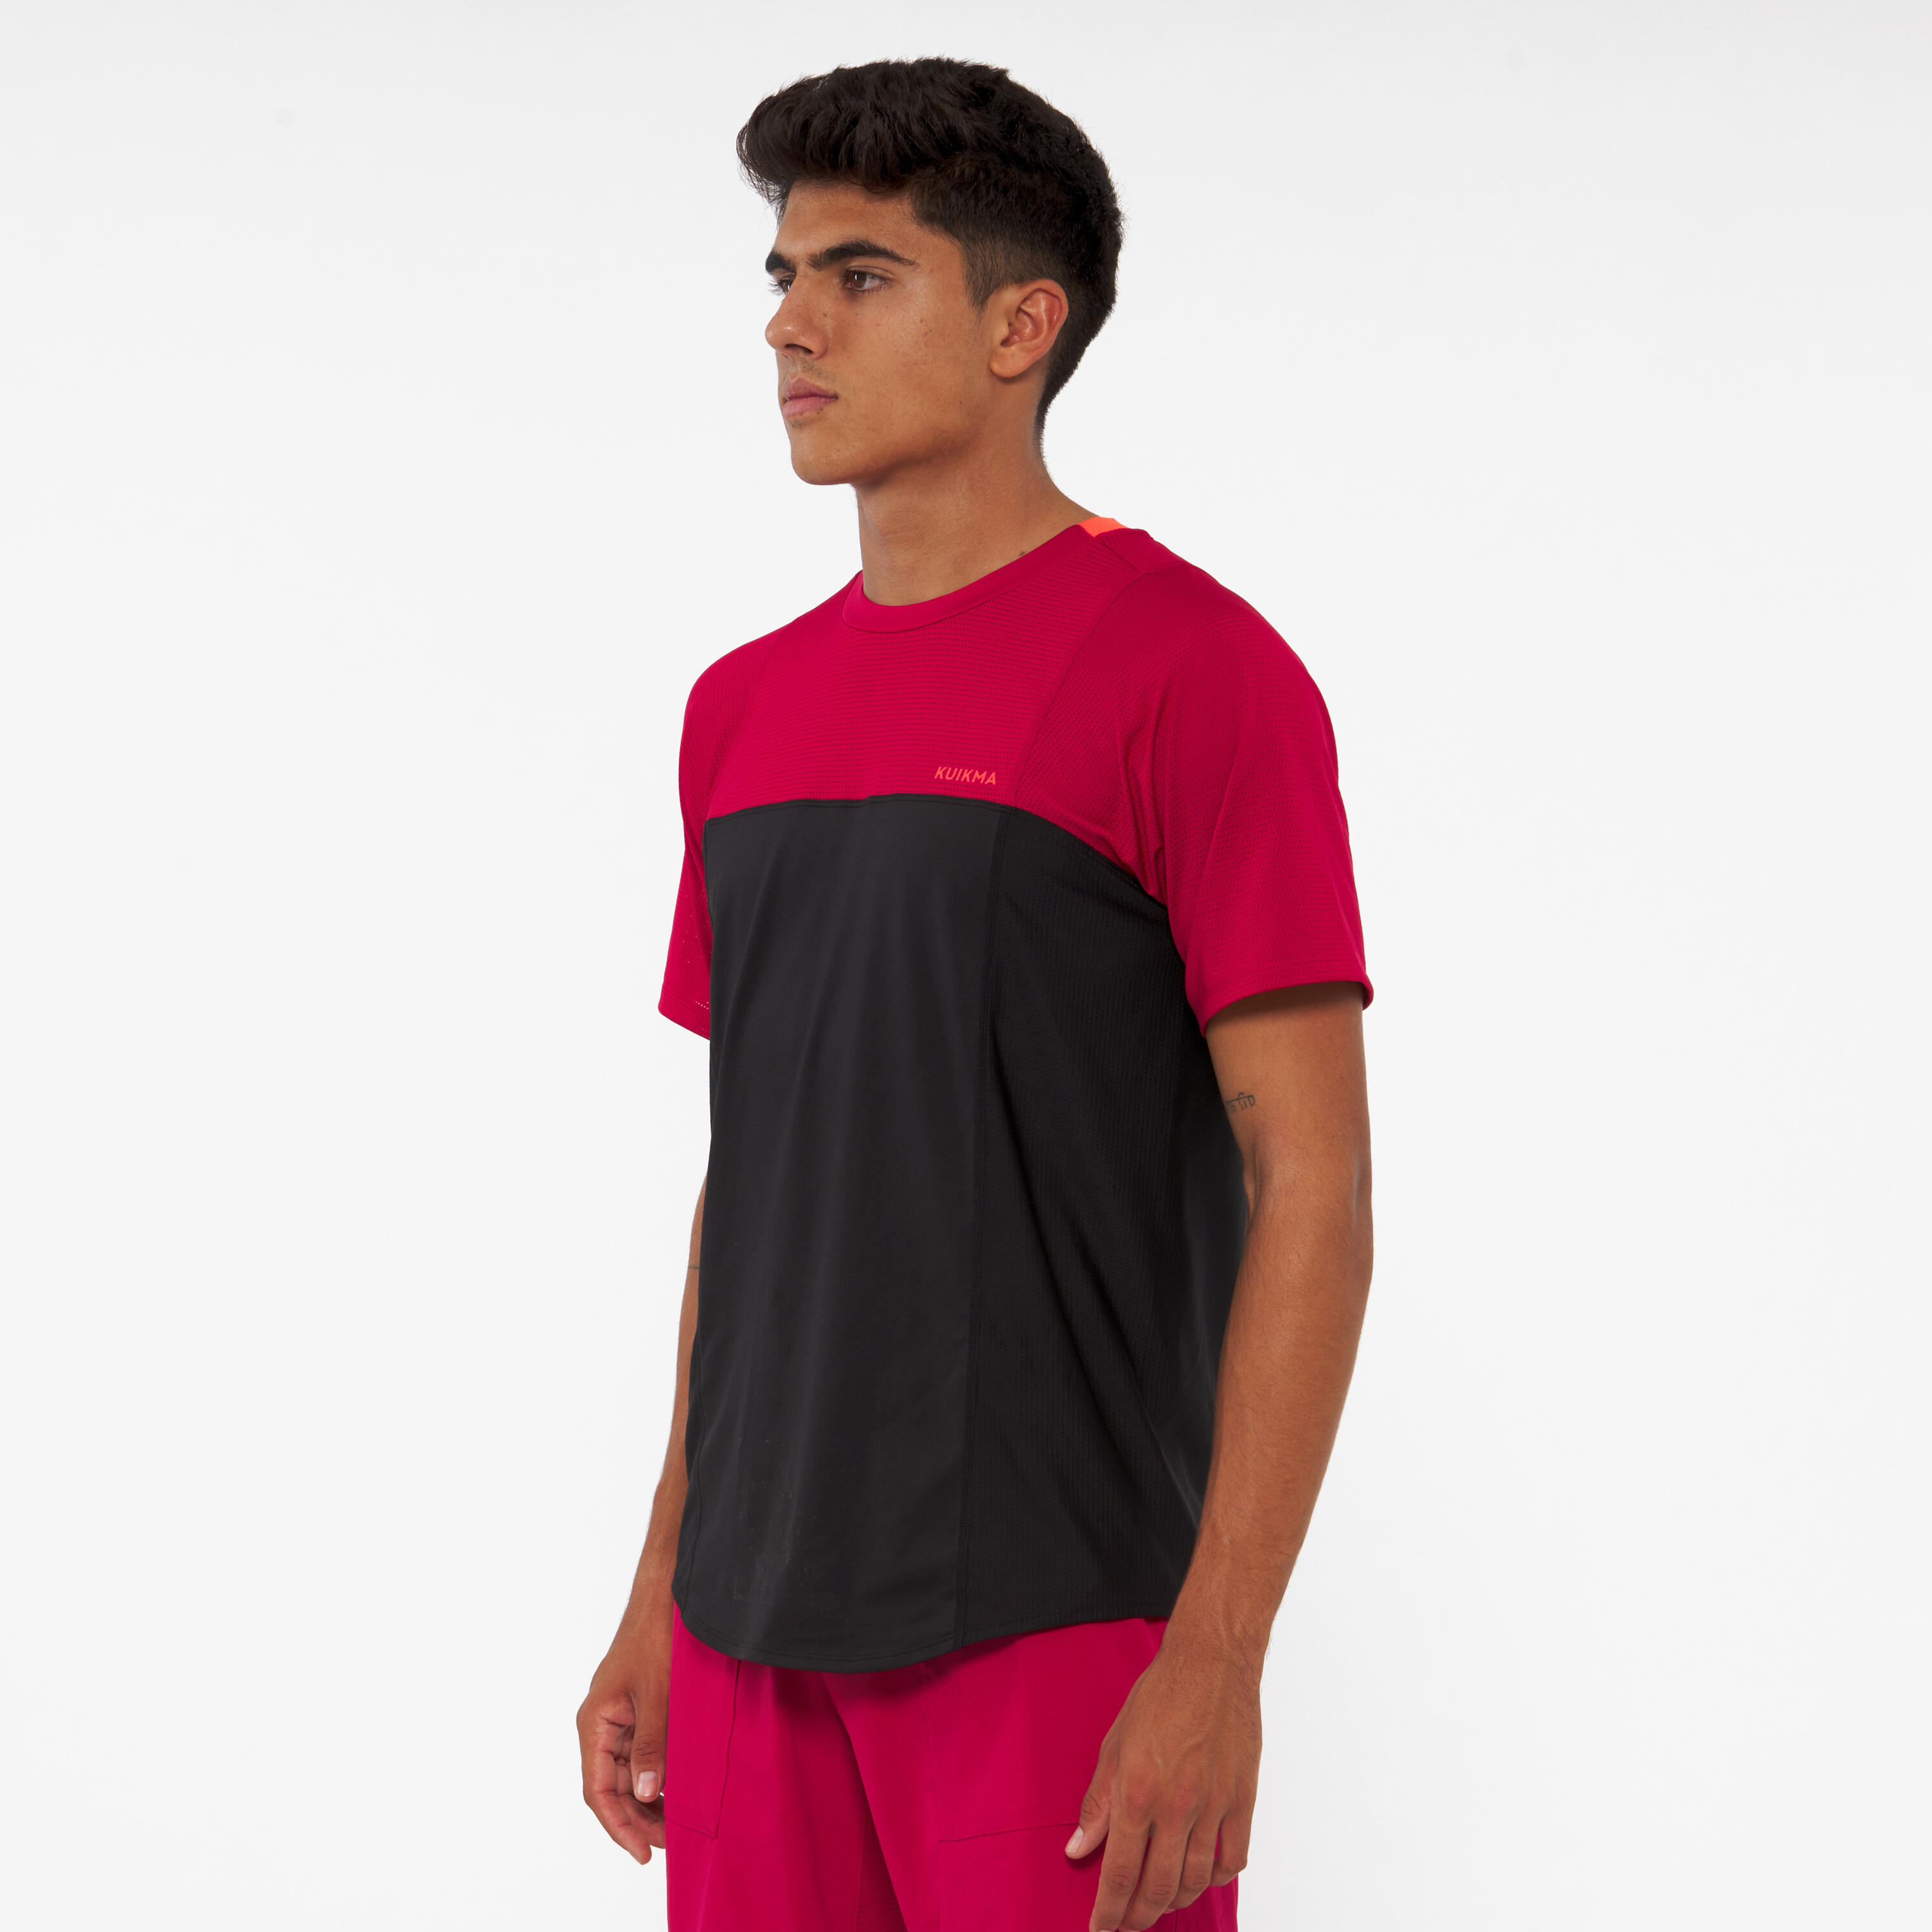 Men's Padel Short-Sleeved Breathable T-Shirt - Black/Red 4/8